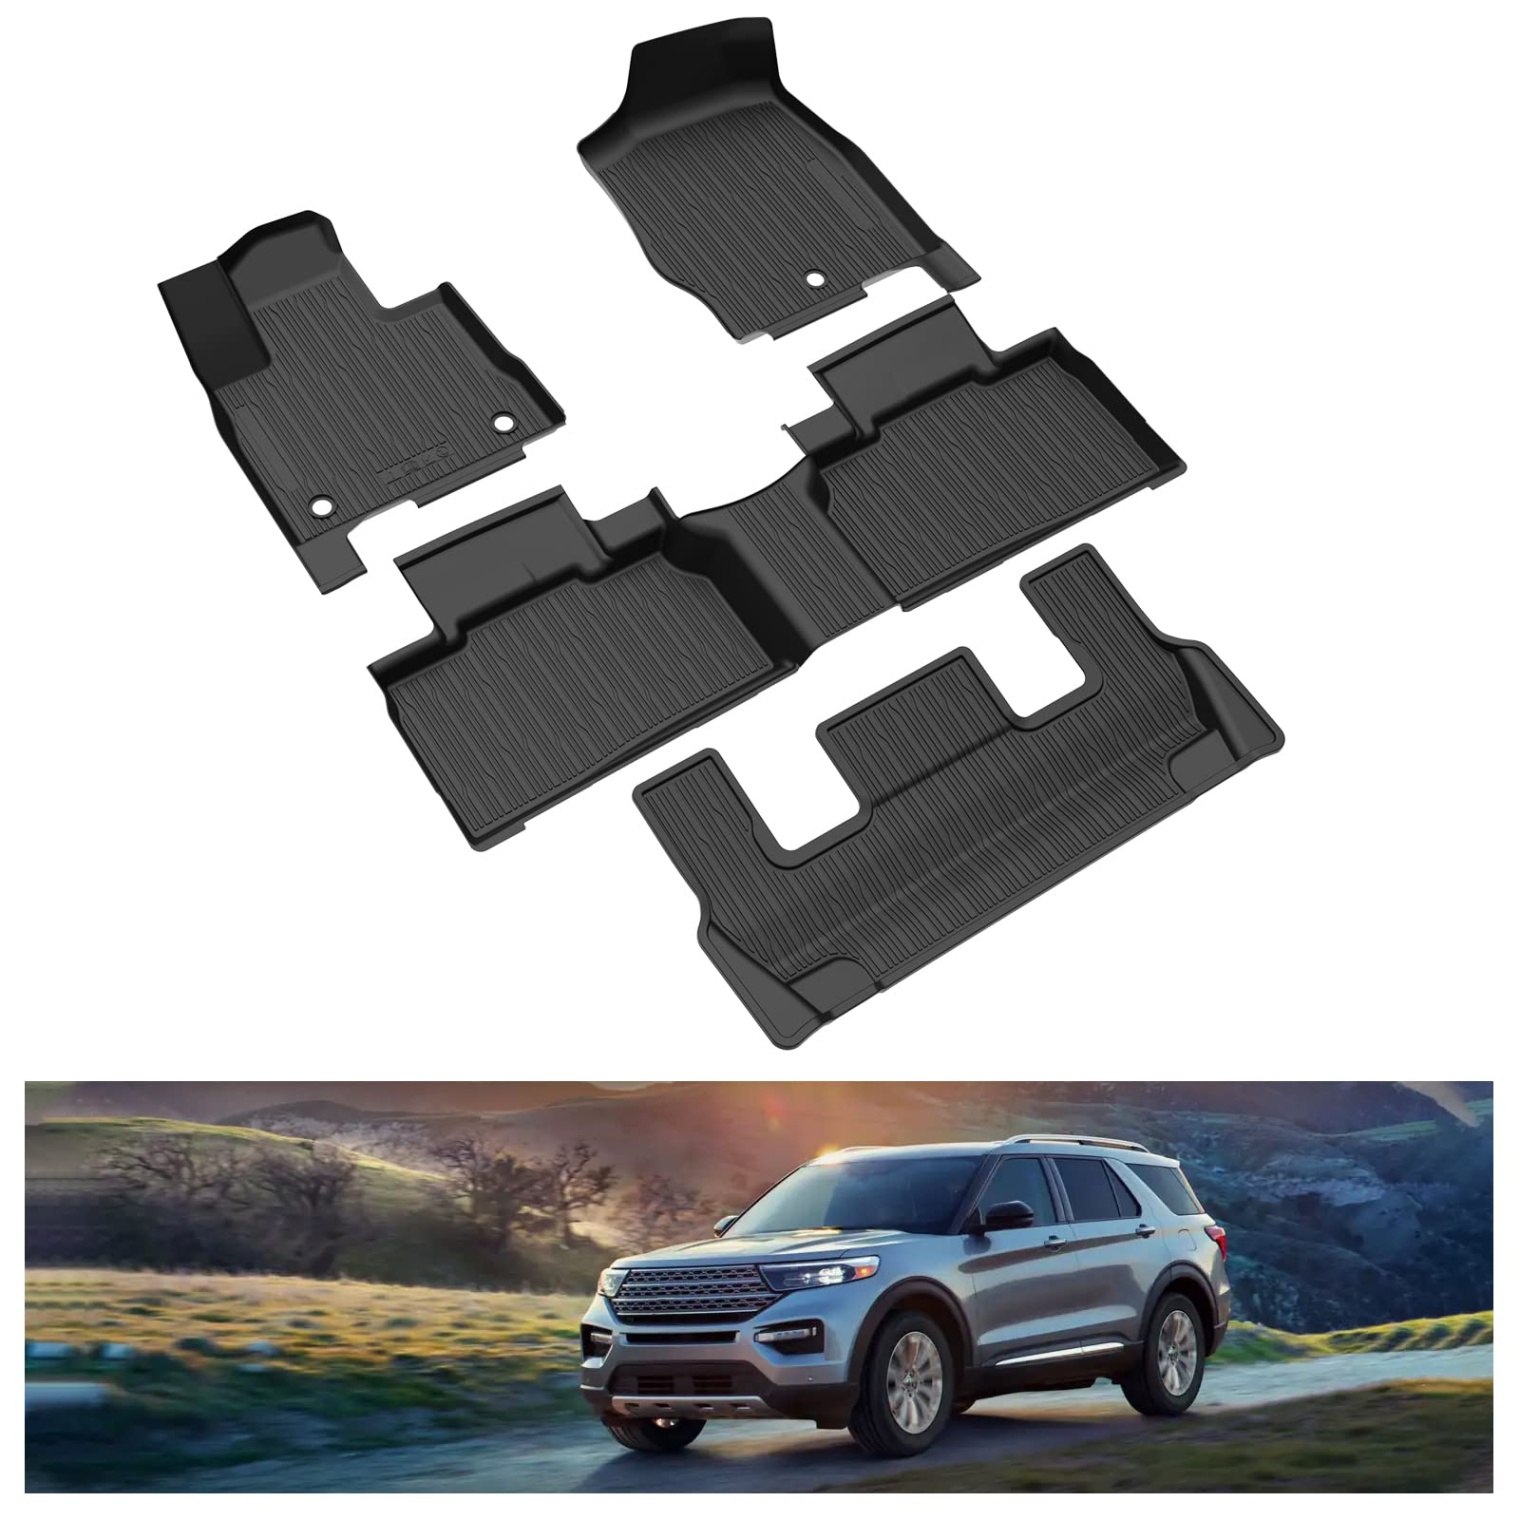 2021 ford explorer accessories Bulan 1 KIWI MASTER Floor Mats Compatible with - Ford Explorer Accessories  Replace OEM #LBZ--AA LBZ--CA All Weather Custom Fit  Row